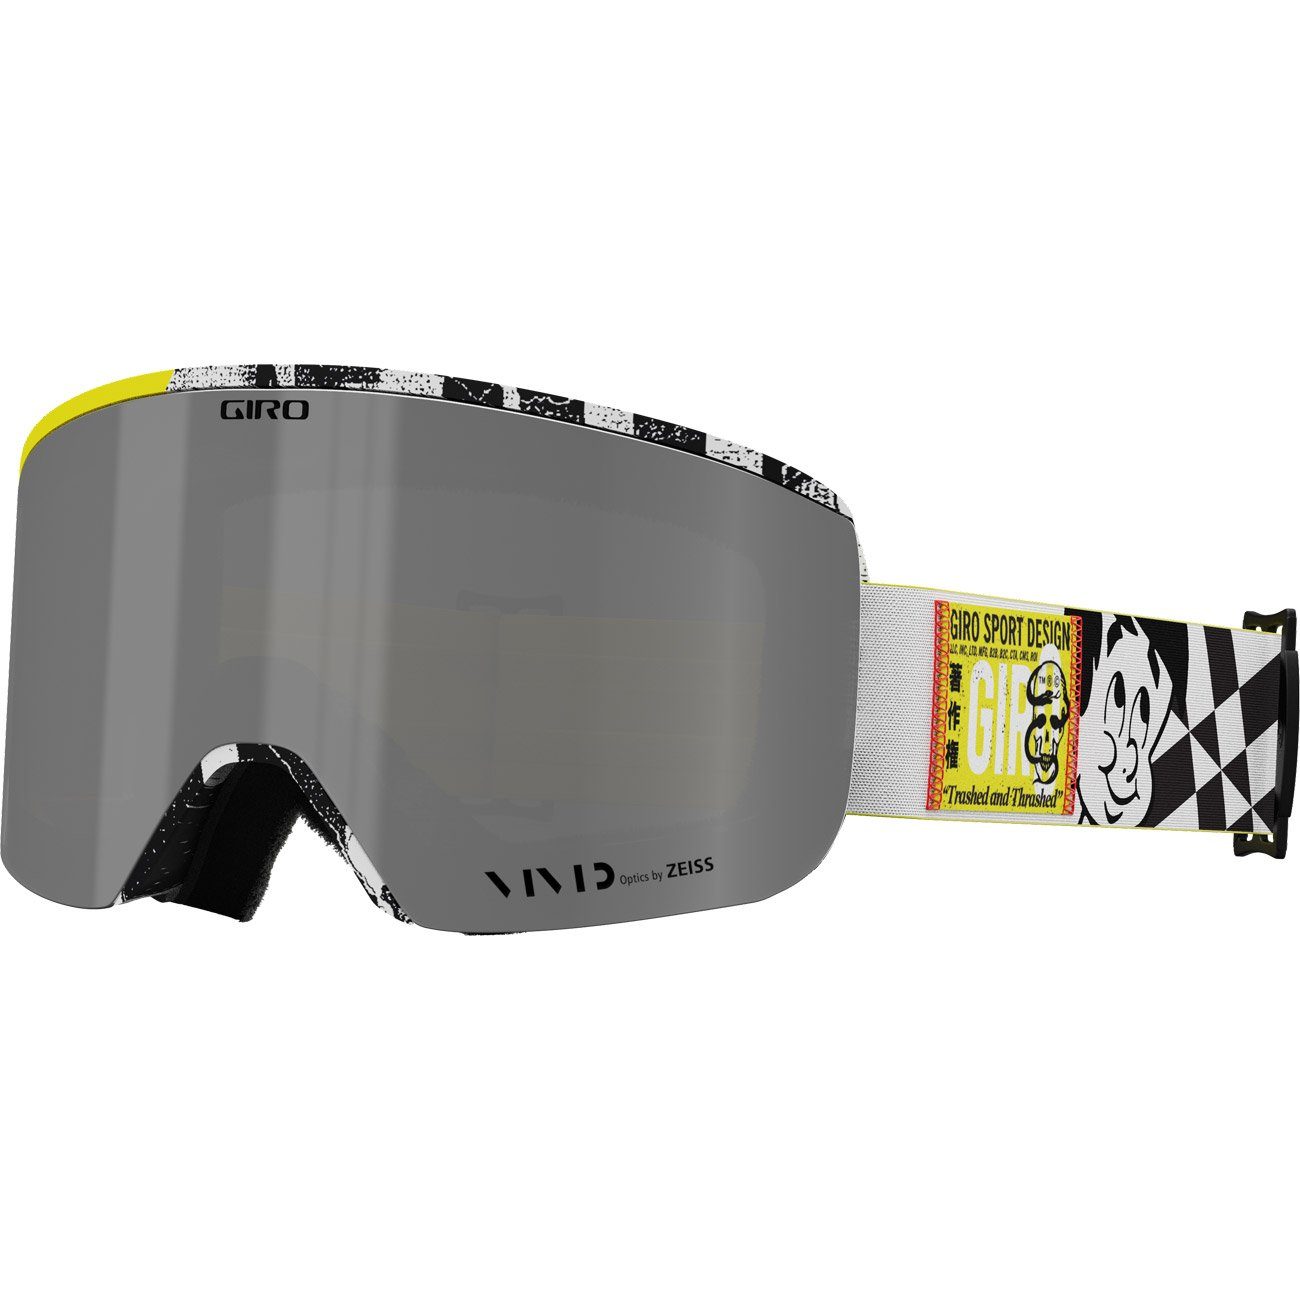 Giro Snowboardbrille, AXIS